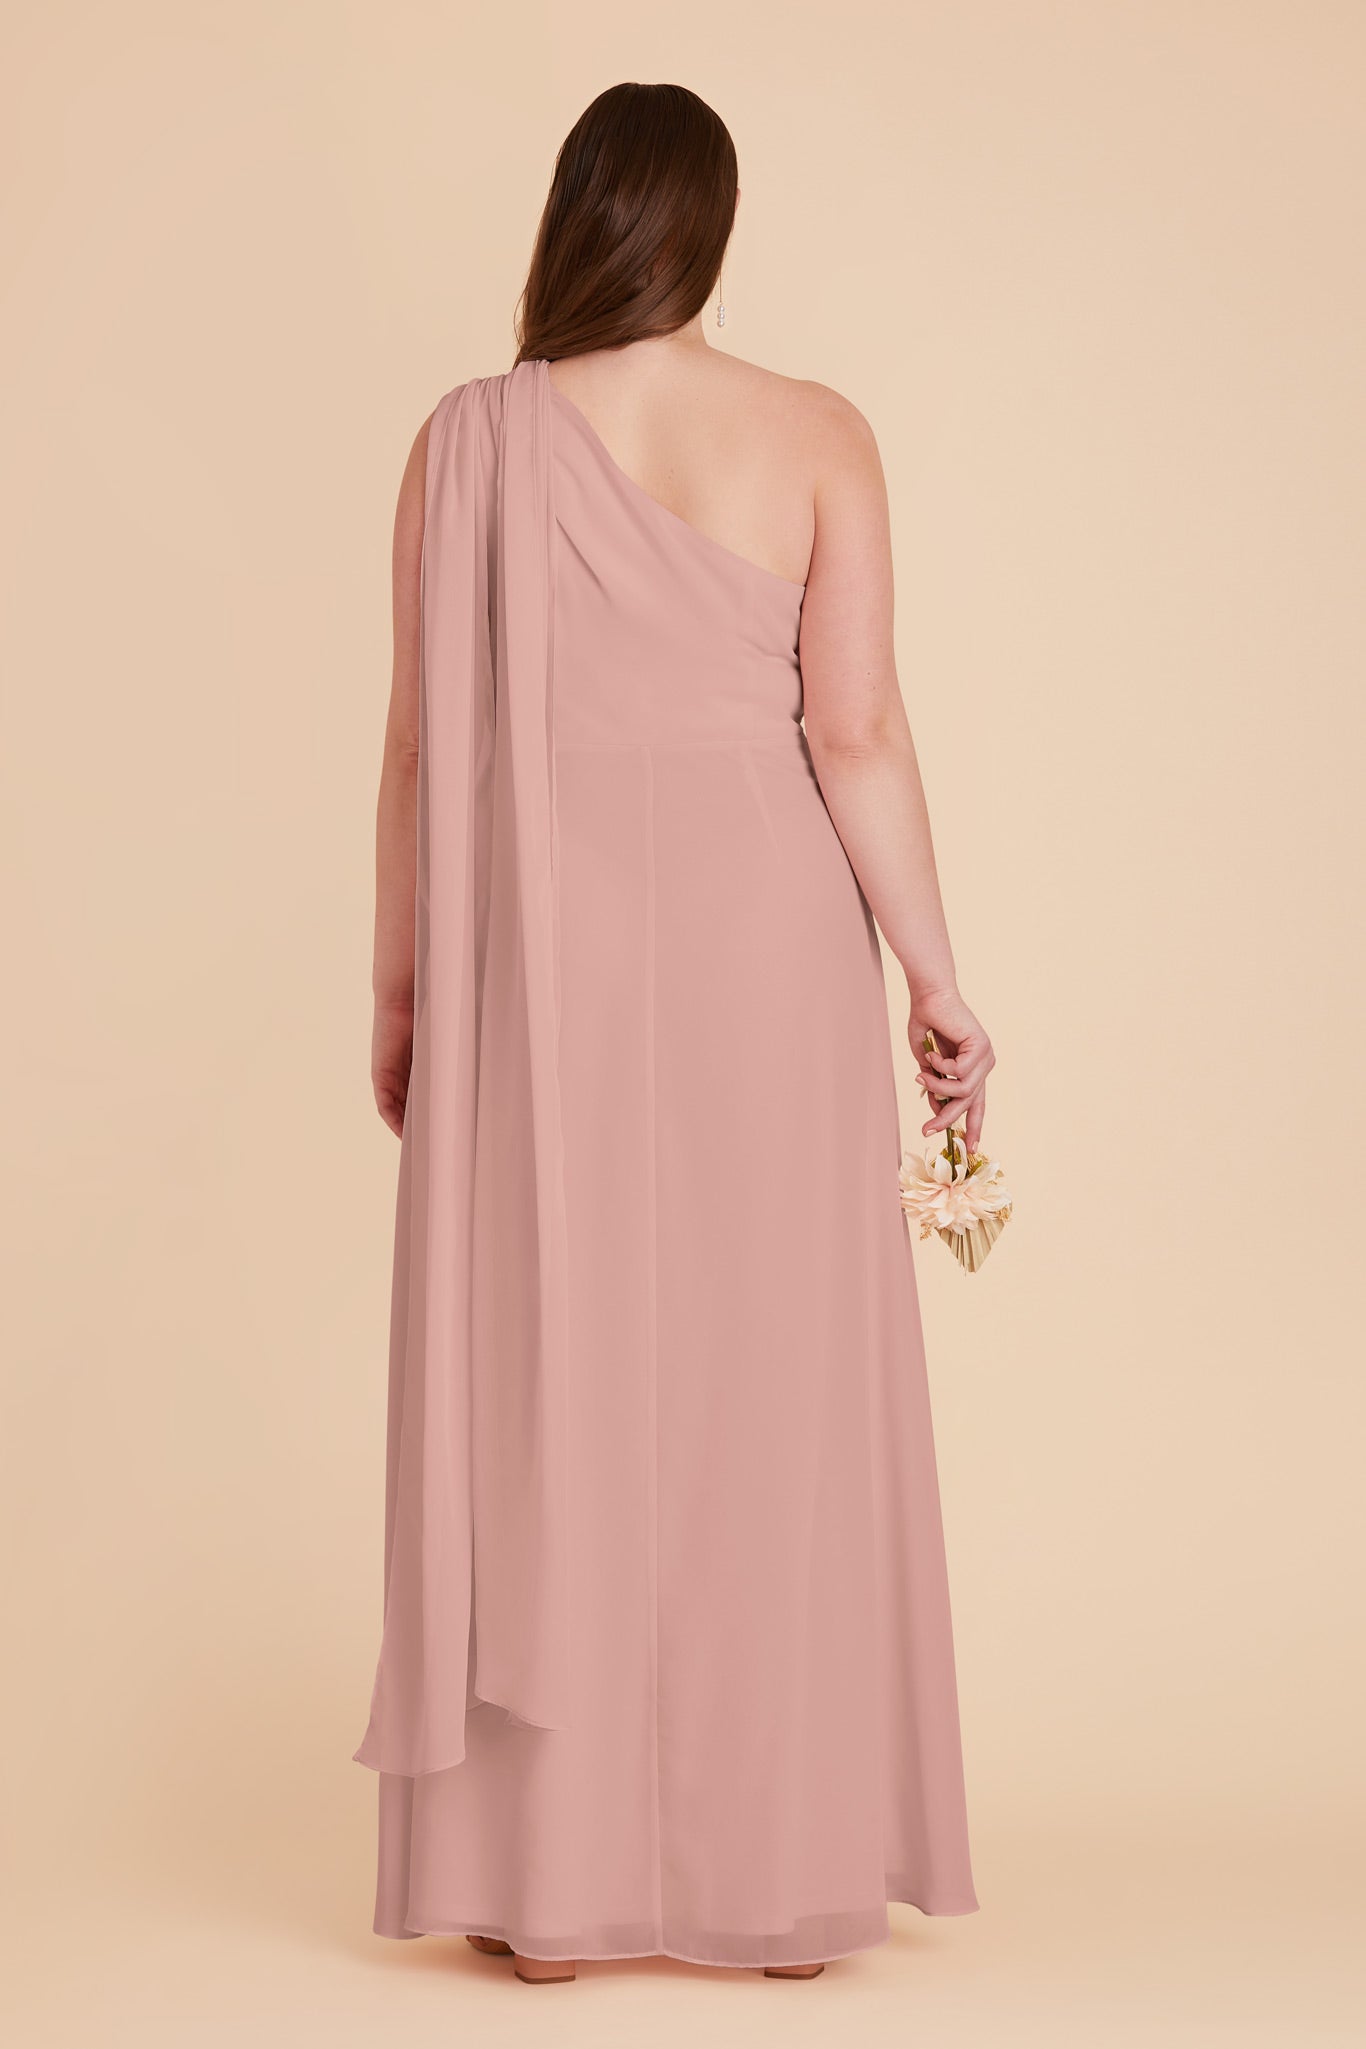 English Rose Melissa Chiffon Dress by Birdy Grey